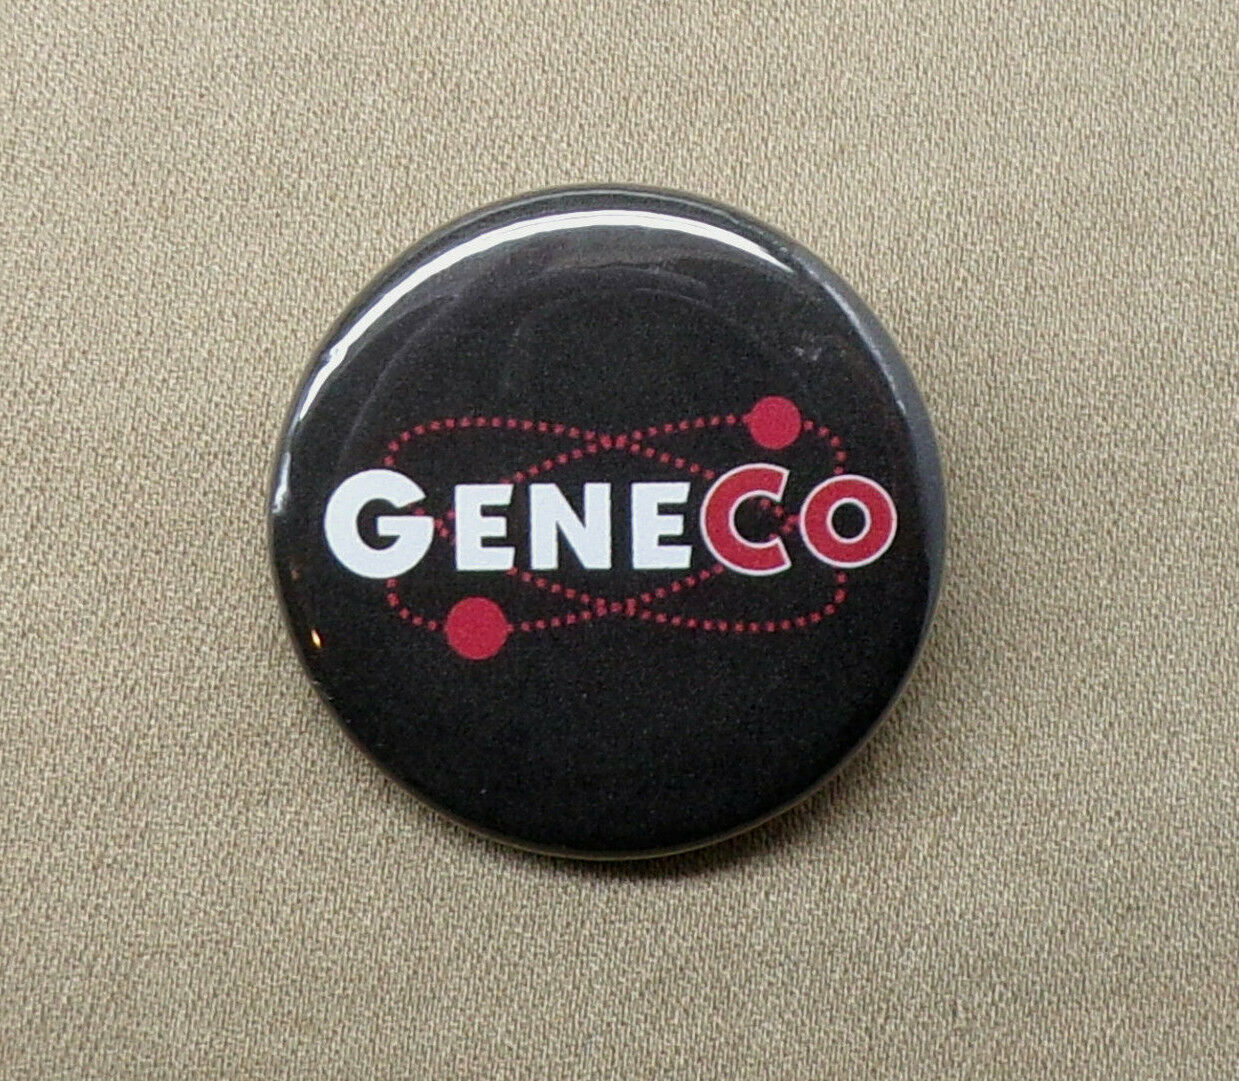 GeneCo Logo 1.25” Button Repo Genetic Opera Organ Transplant Musical Dystopia